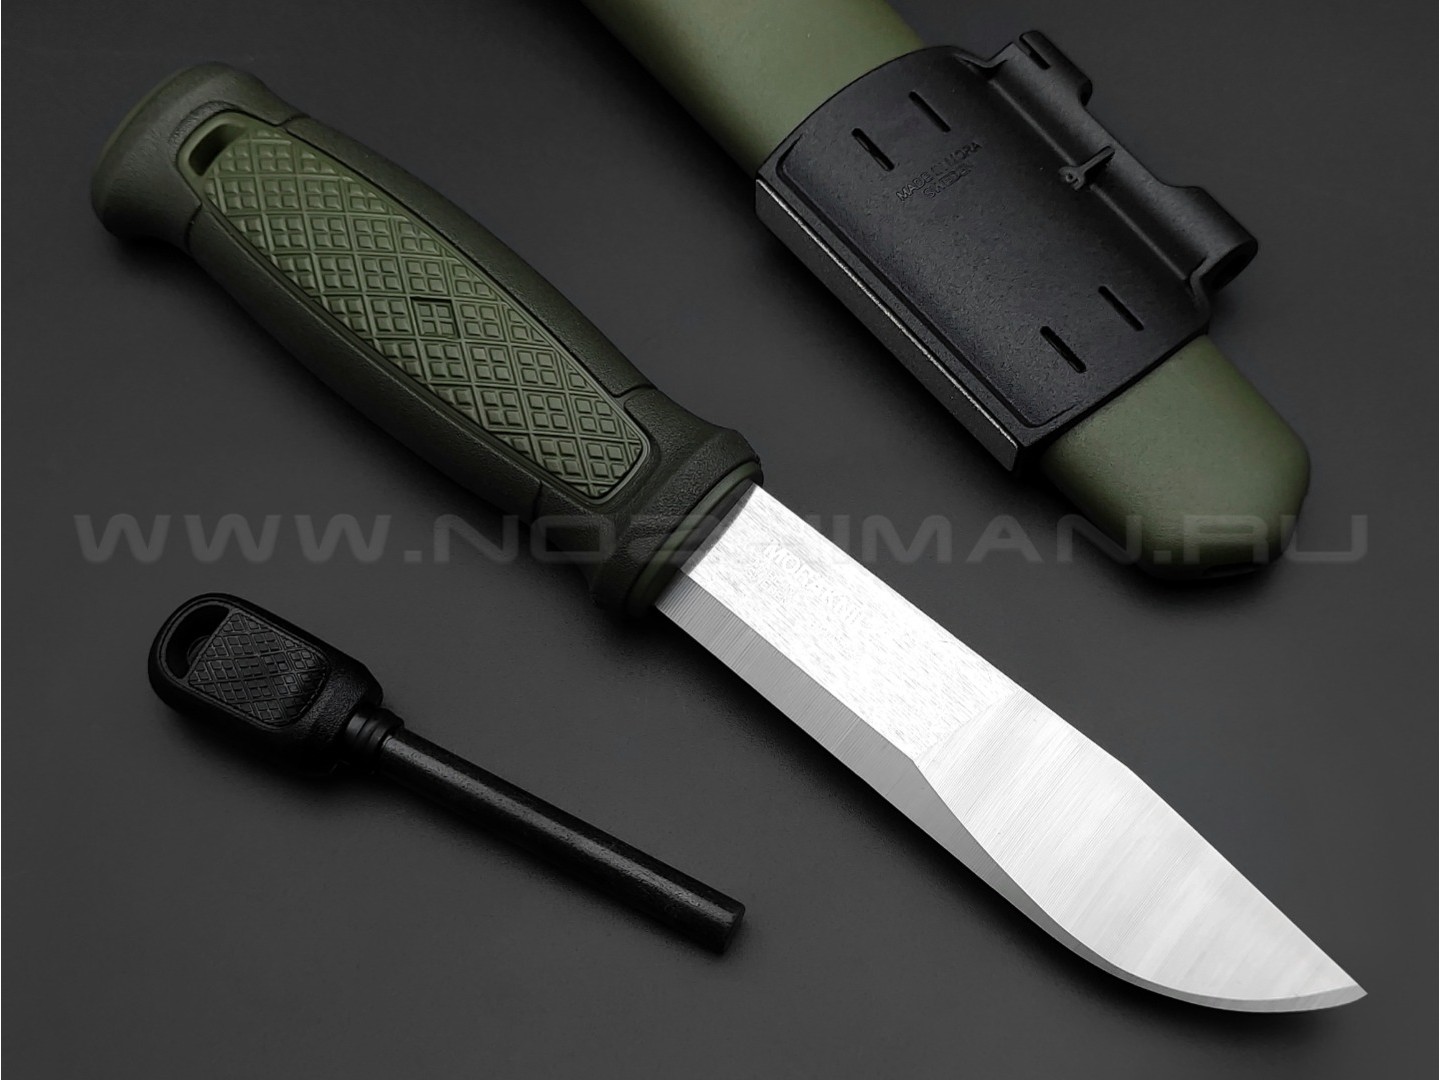 MORAKNIV нож Kansbol with Survival kit 13912 сталь inox, рукоять резинопластик